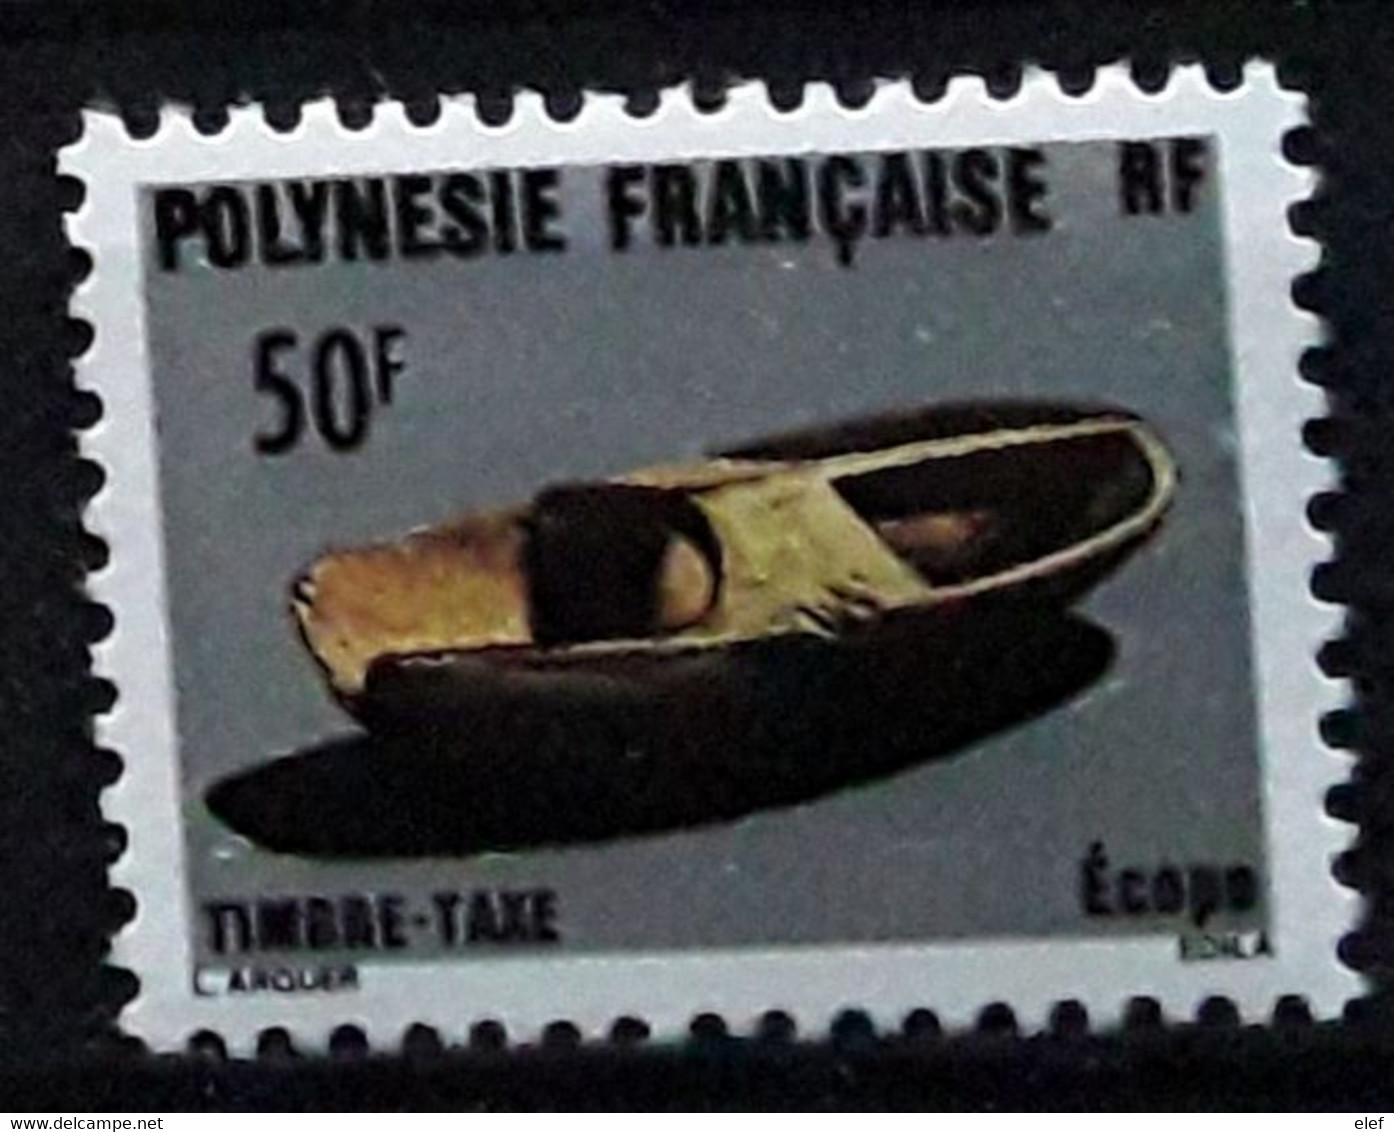 POLYNESIE FRANÇAISE TAXE Postage Due  1987  Yvert No 9 , 50 F , ECOPE  , Neuf ** MNH  TB - Postage Due